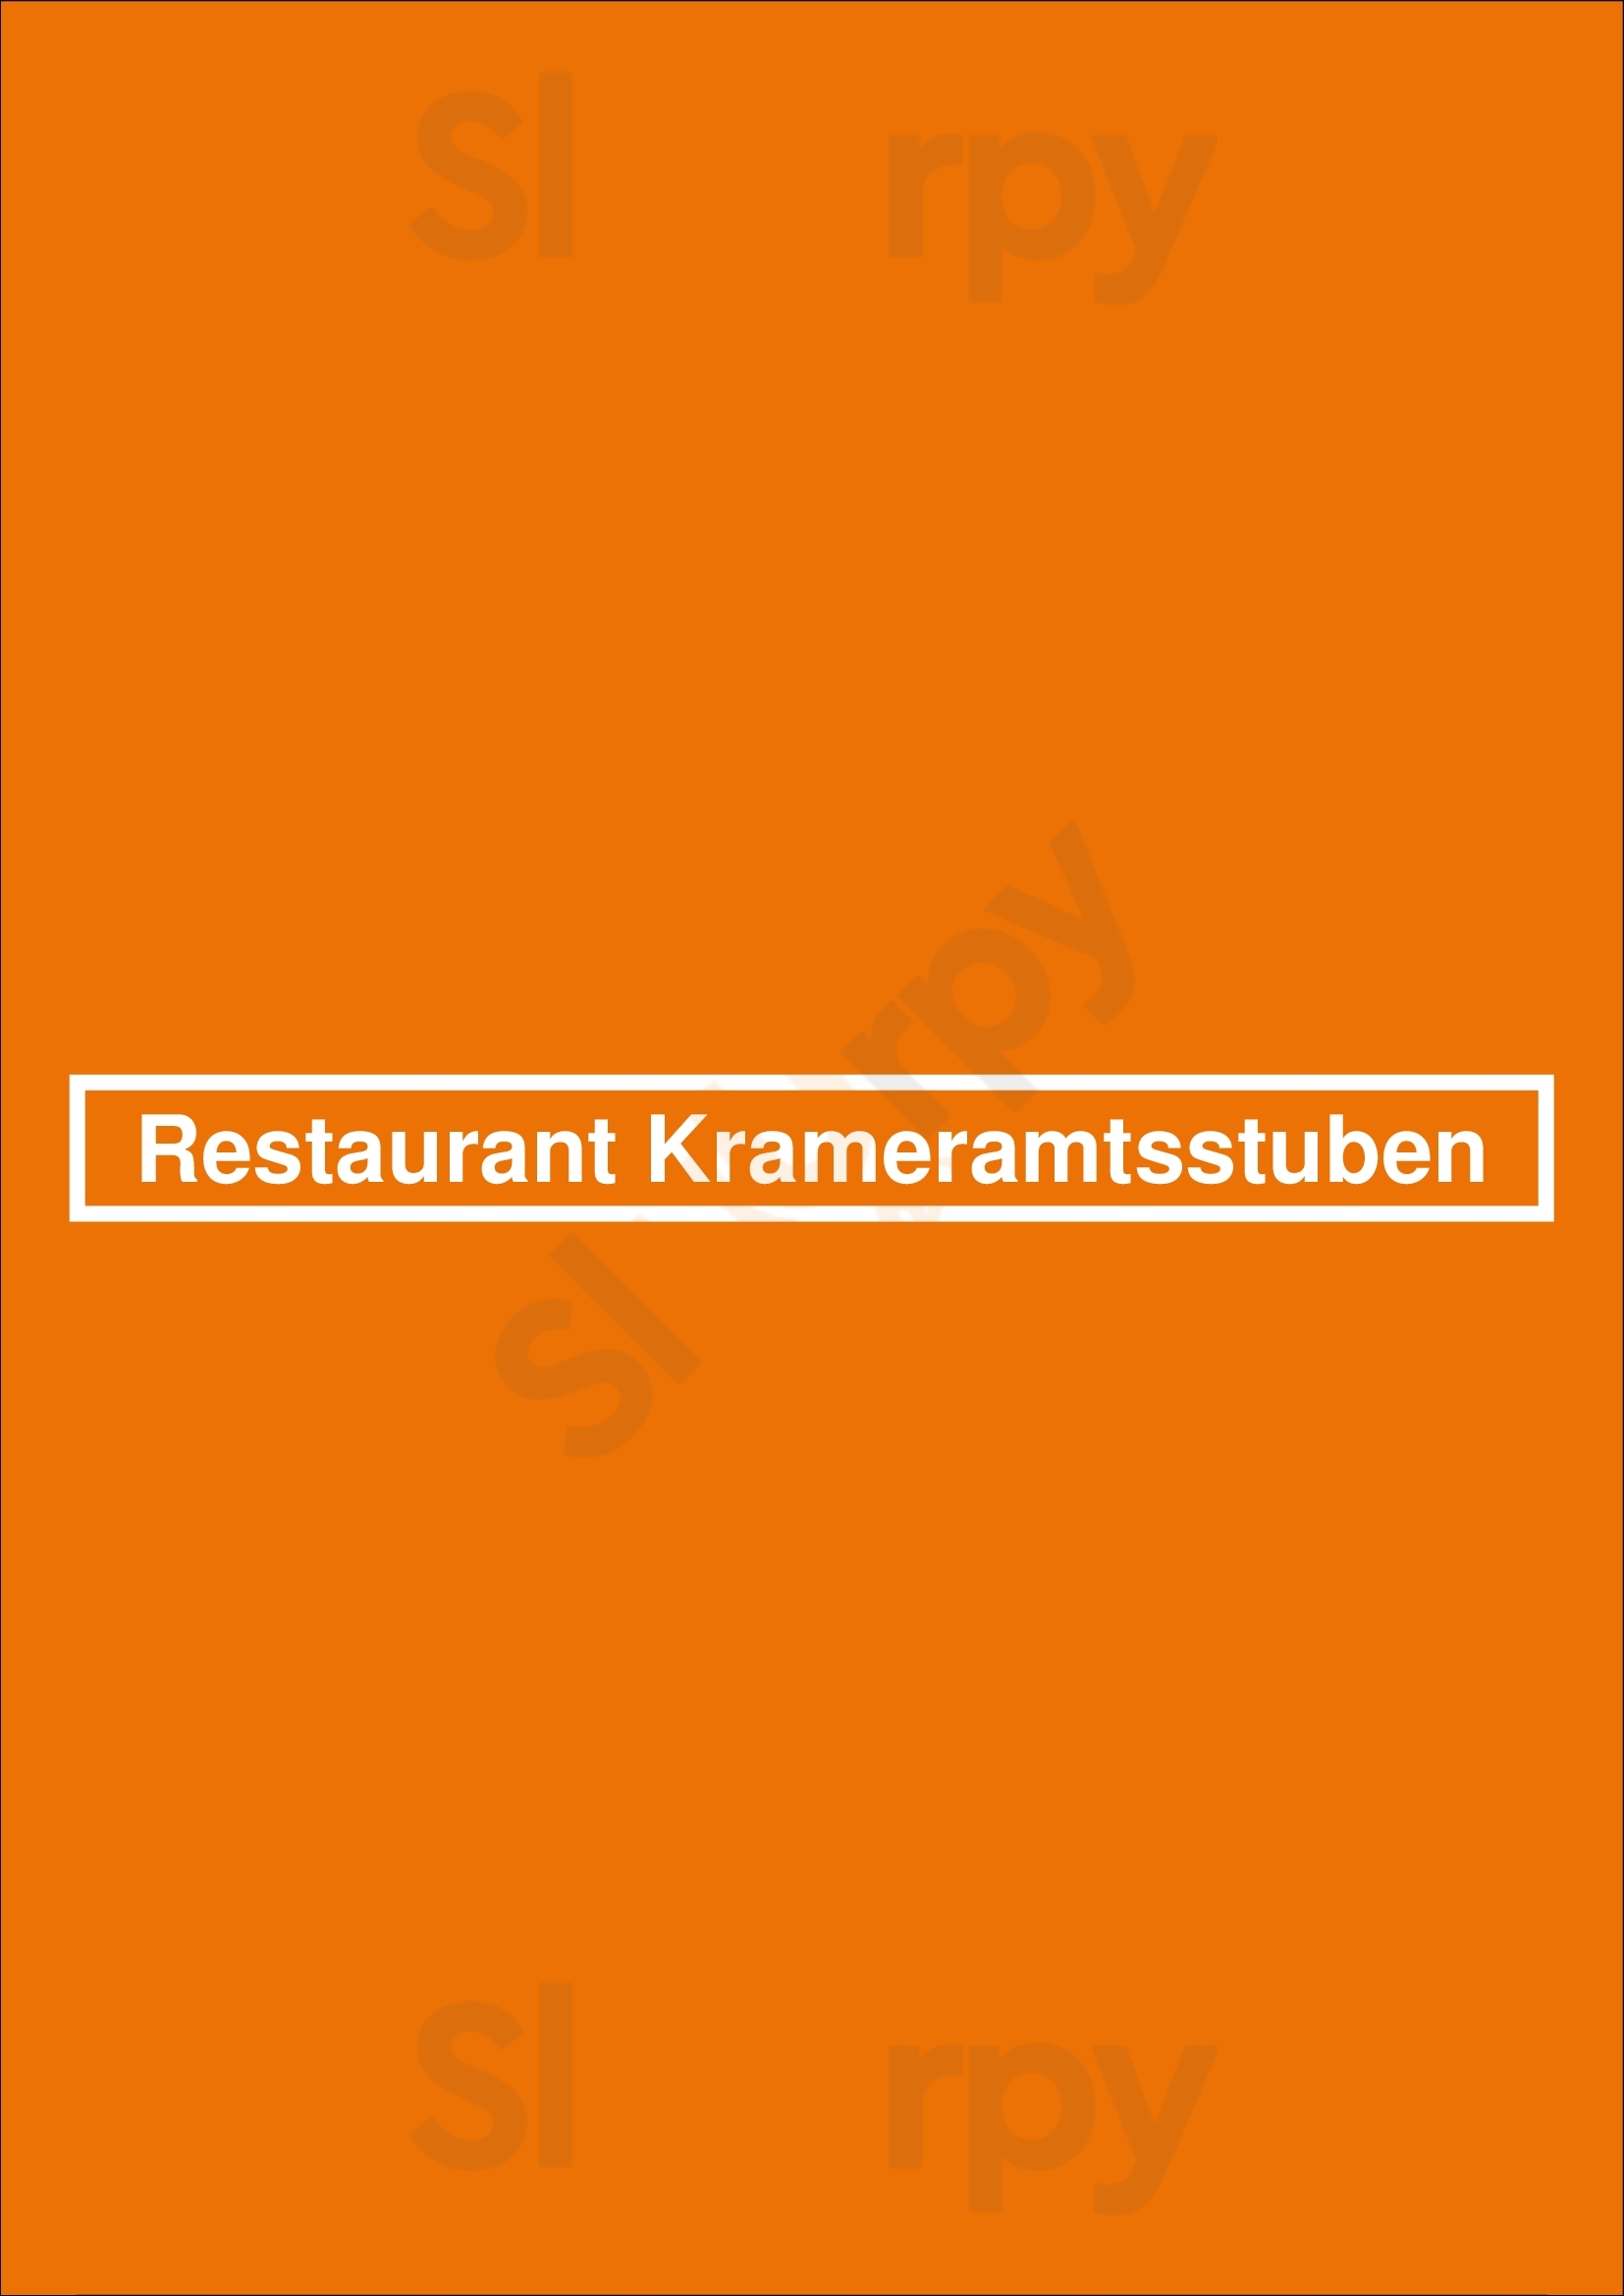 Restaurant Krameramtsstuben Hamburg Menu - 1